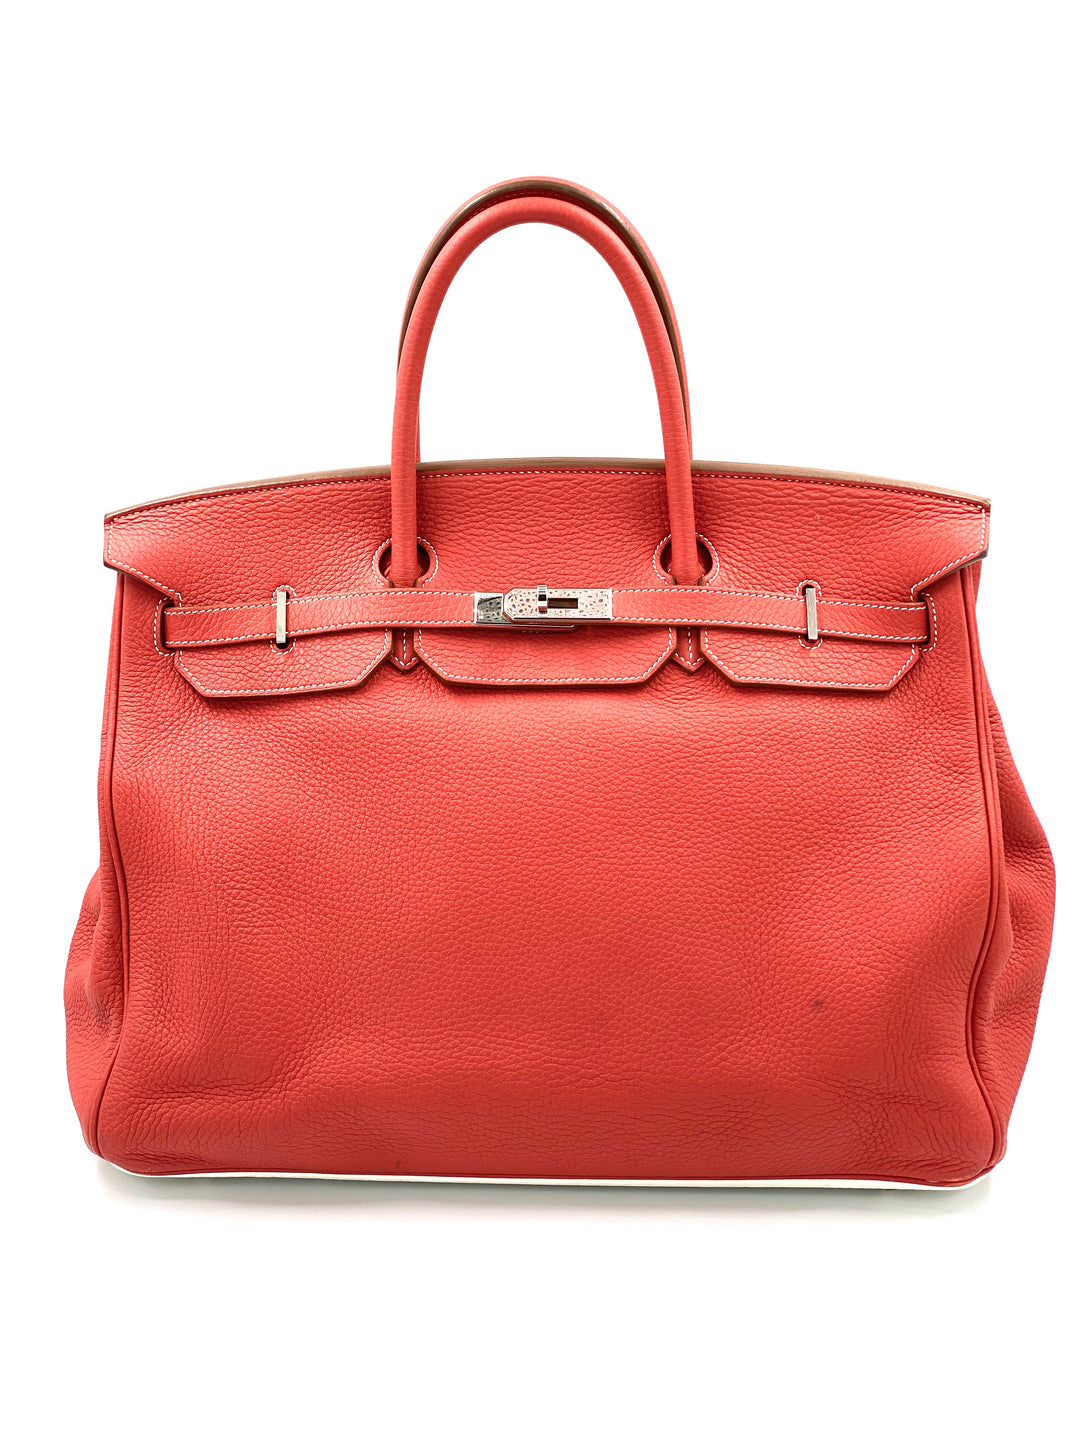 Hermes Birkin Togo Leder Rose Jaipur 40 Cm Bag 